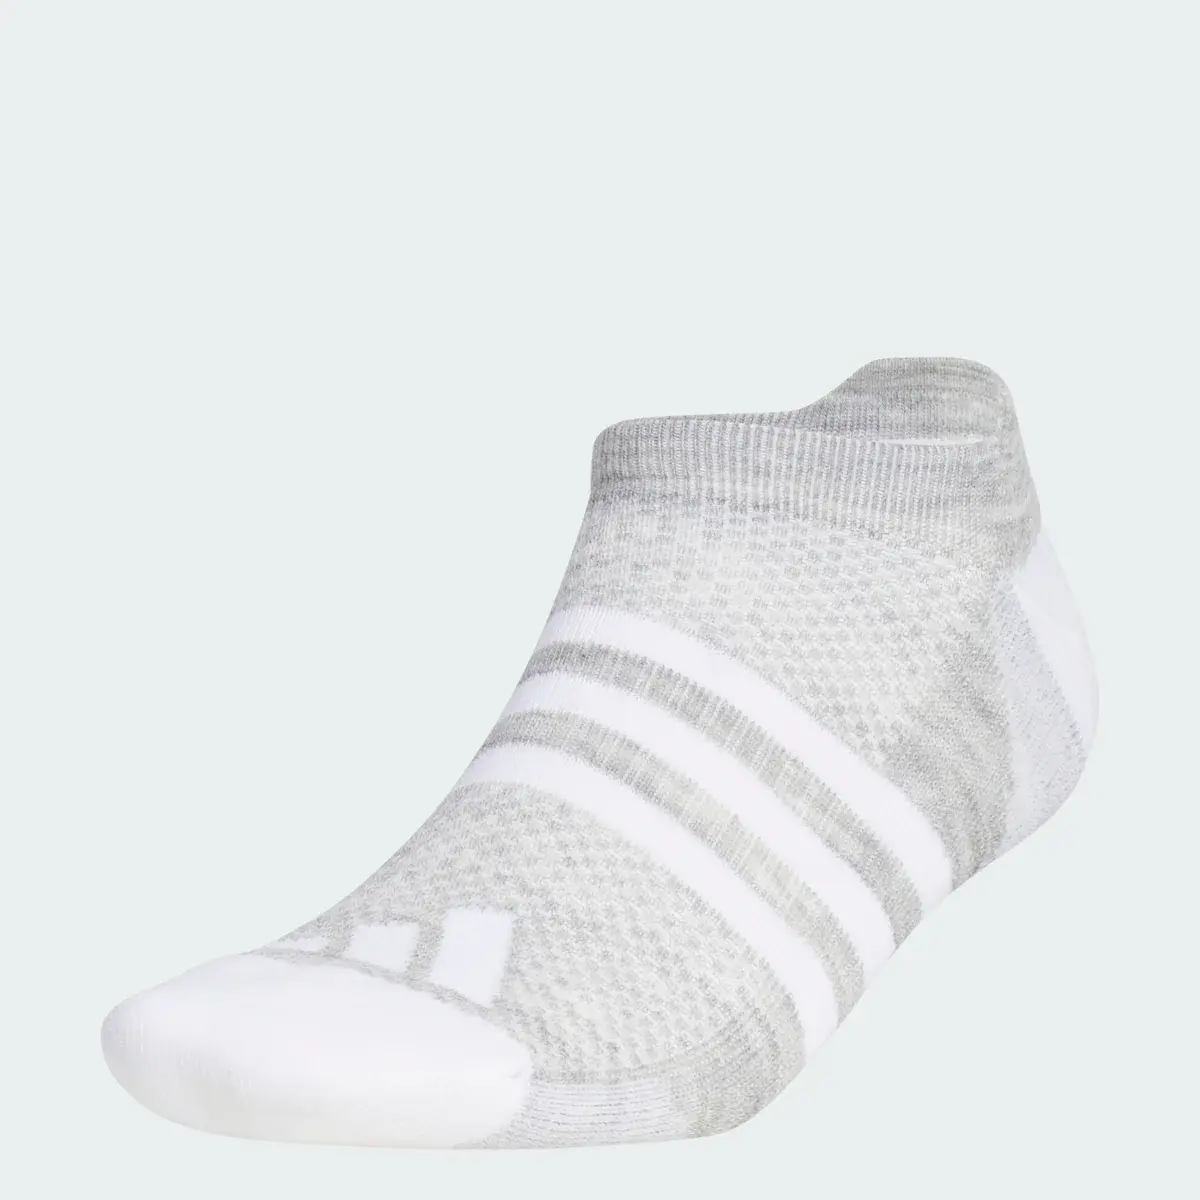 Adidas Wool Low Ankle Socks. 1